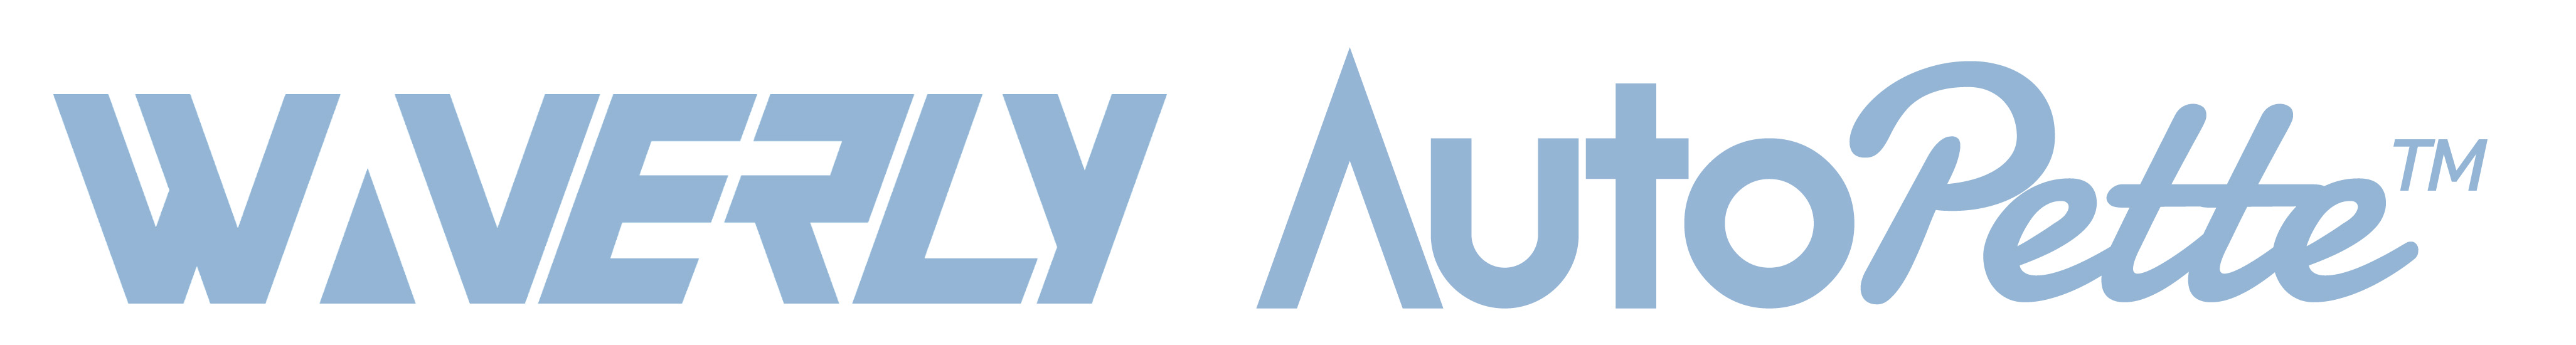 Waverly AutoPette Logo